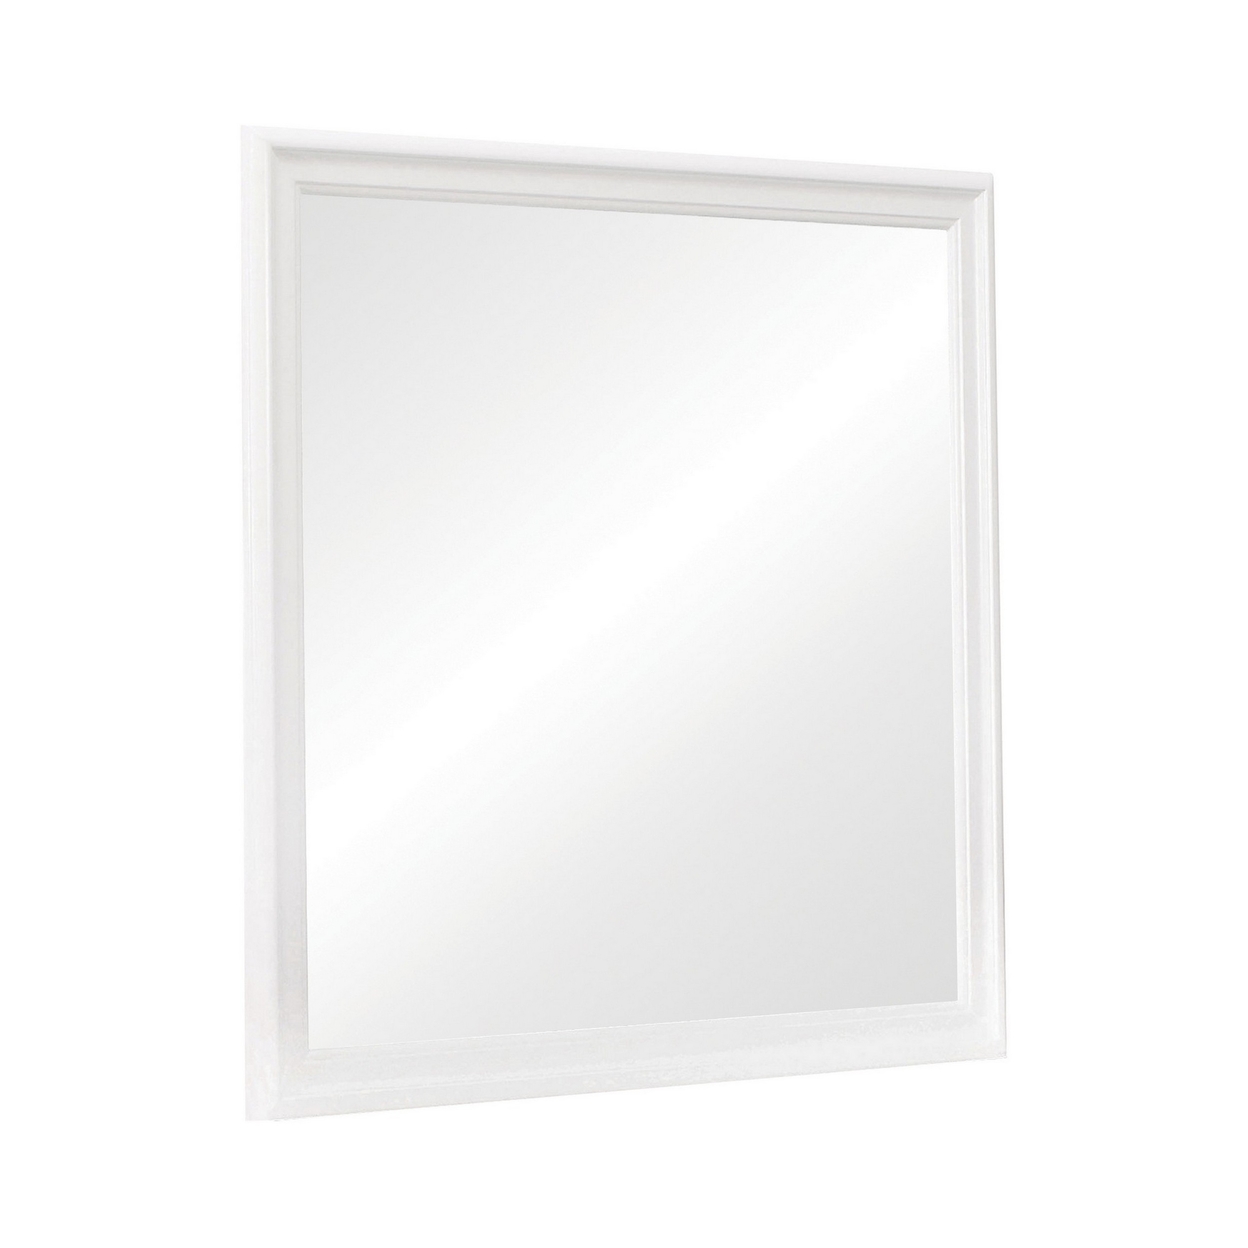 Molded Wooden Frame Mirror With Mounting Hardware, White- Saltoro Sherpi